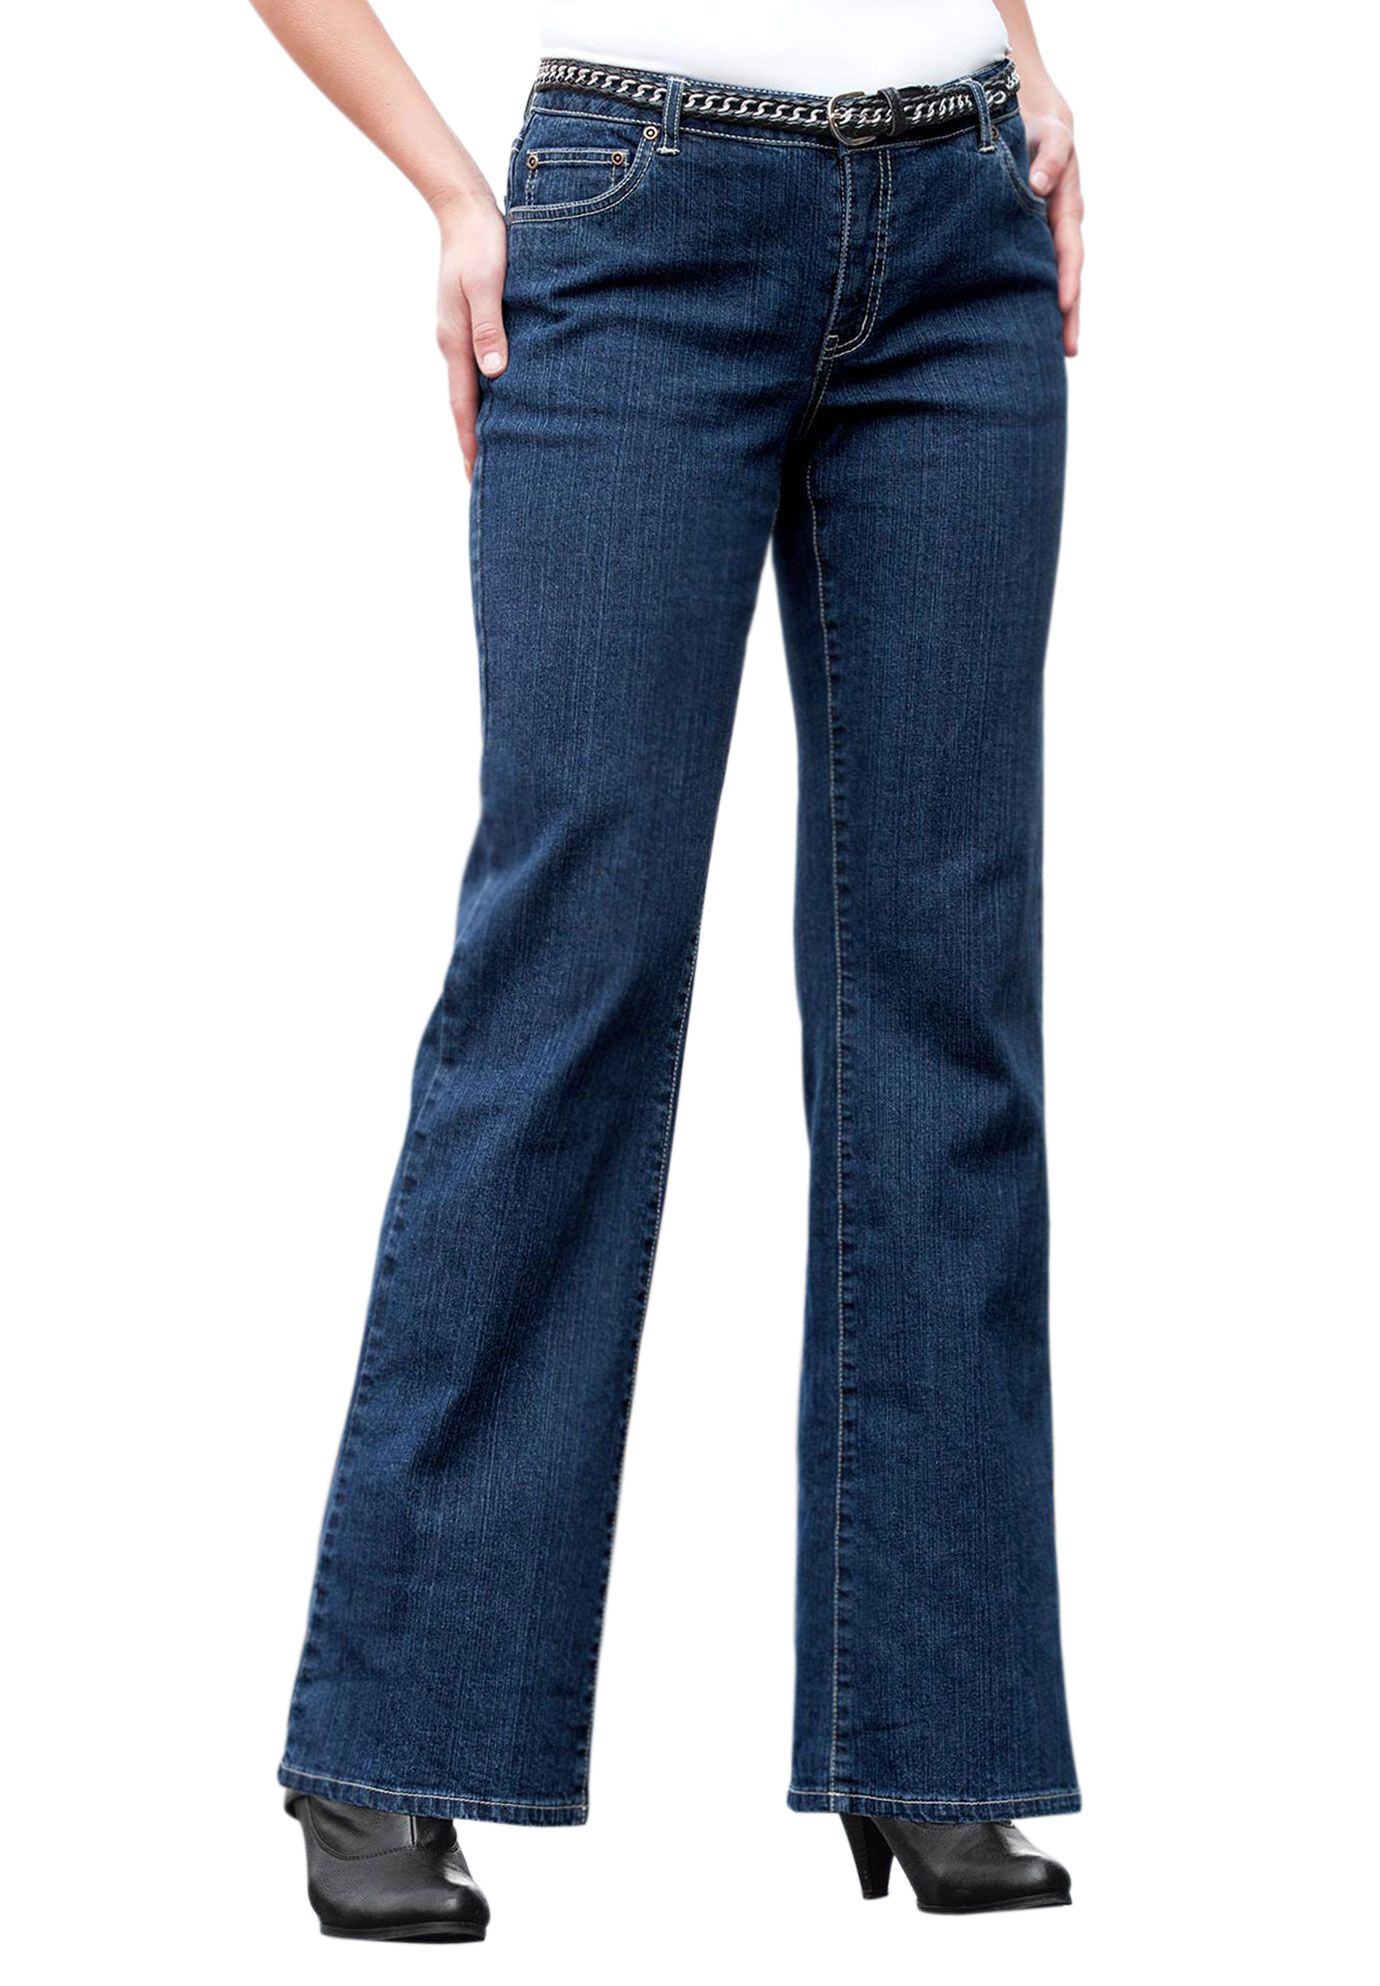 size 22 black jeans